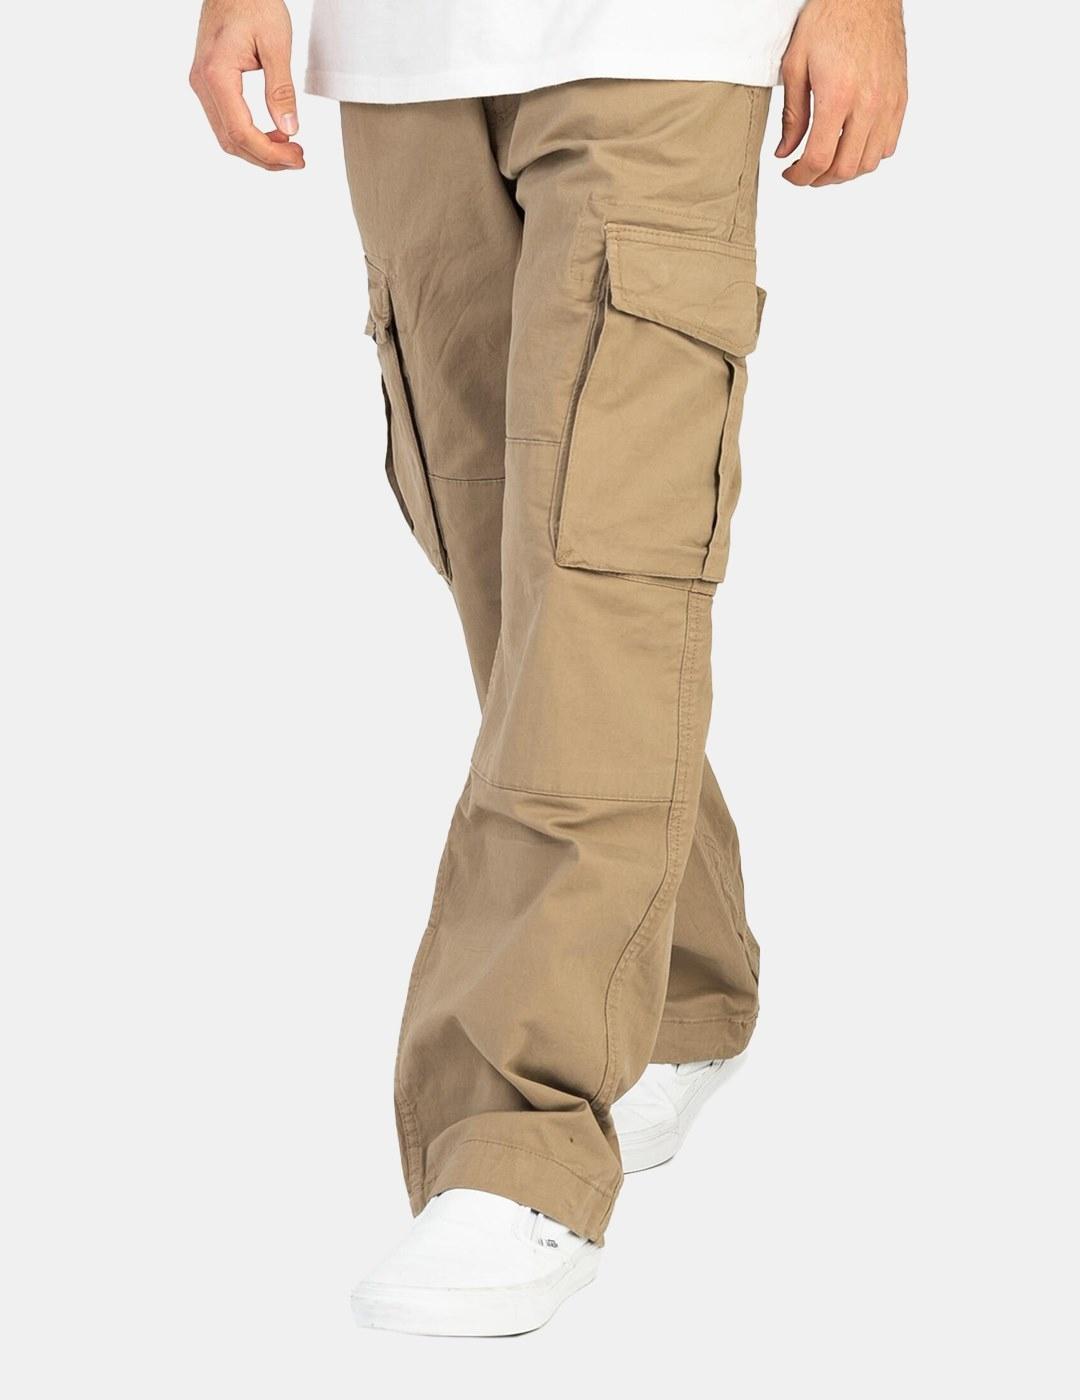 Pantalones Reell Flex Cargo Lc